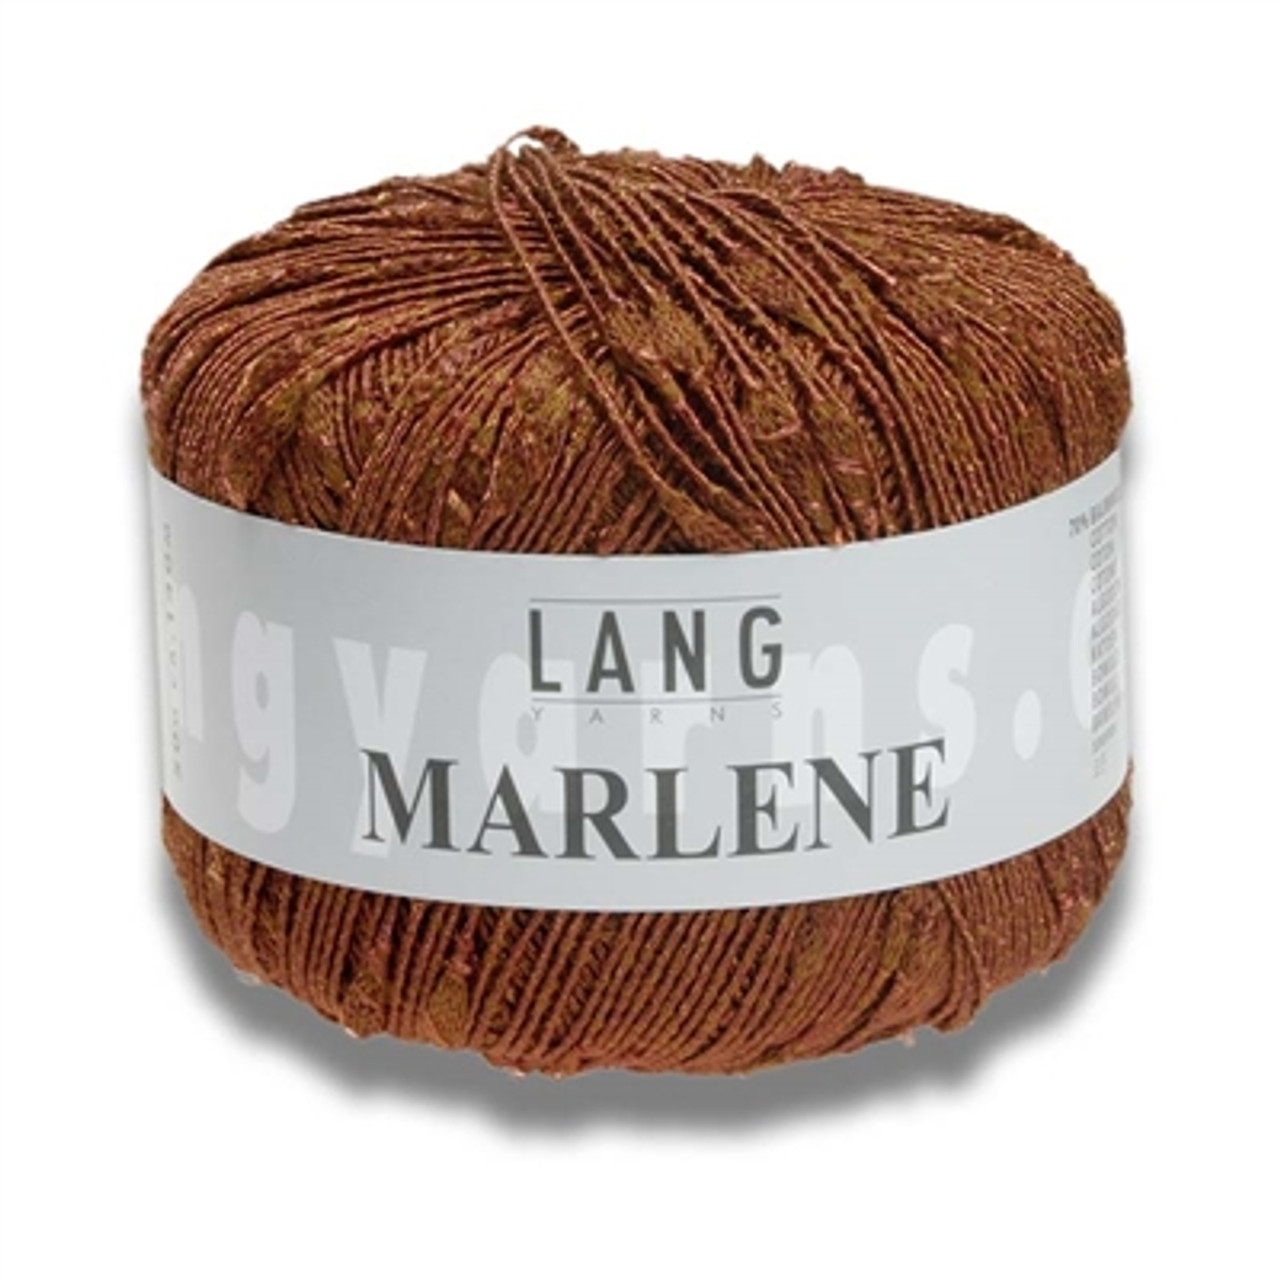 Marlene Cotton Blend Yarn by Lang